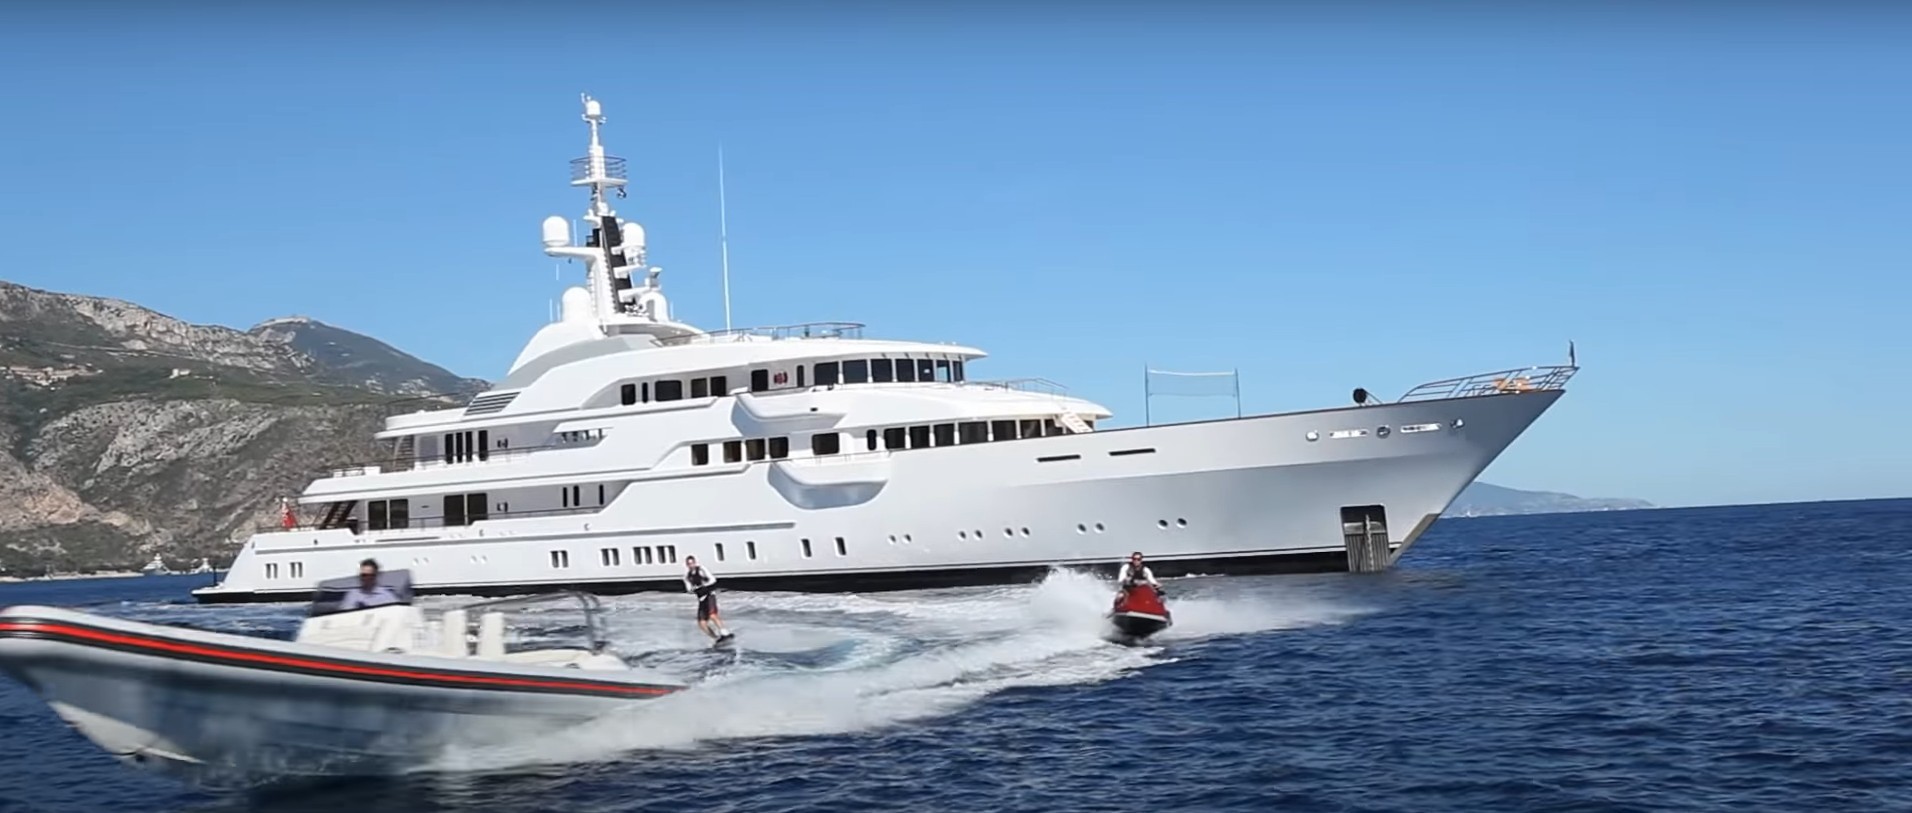 Rich men's taste - Pininfarina luxury yacht